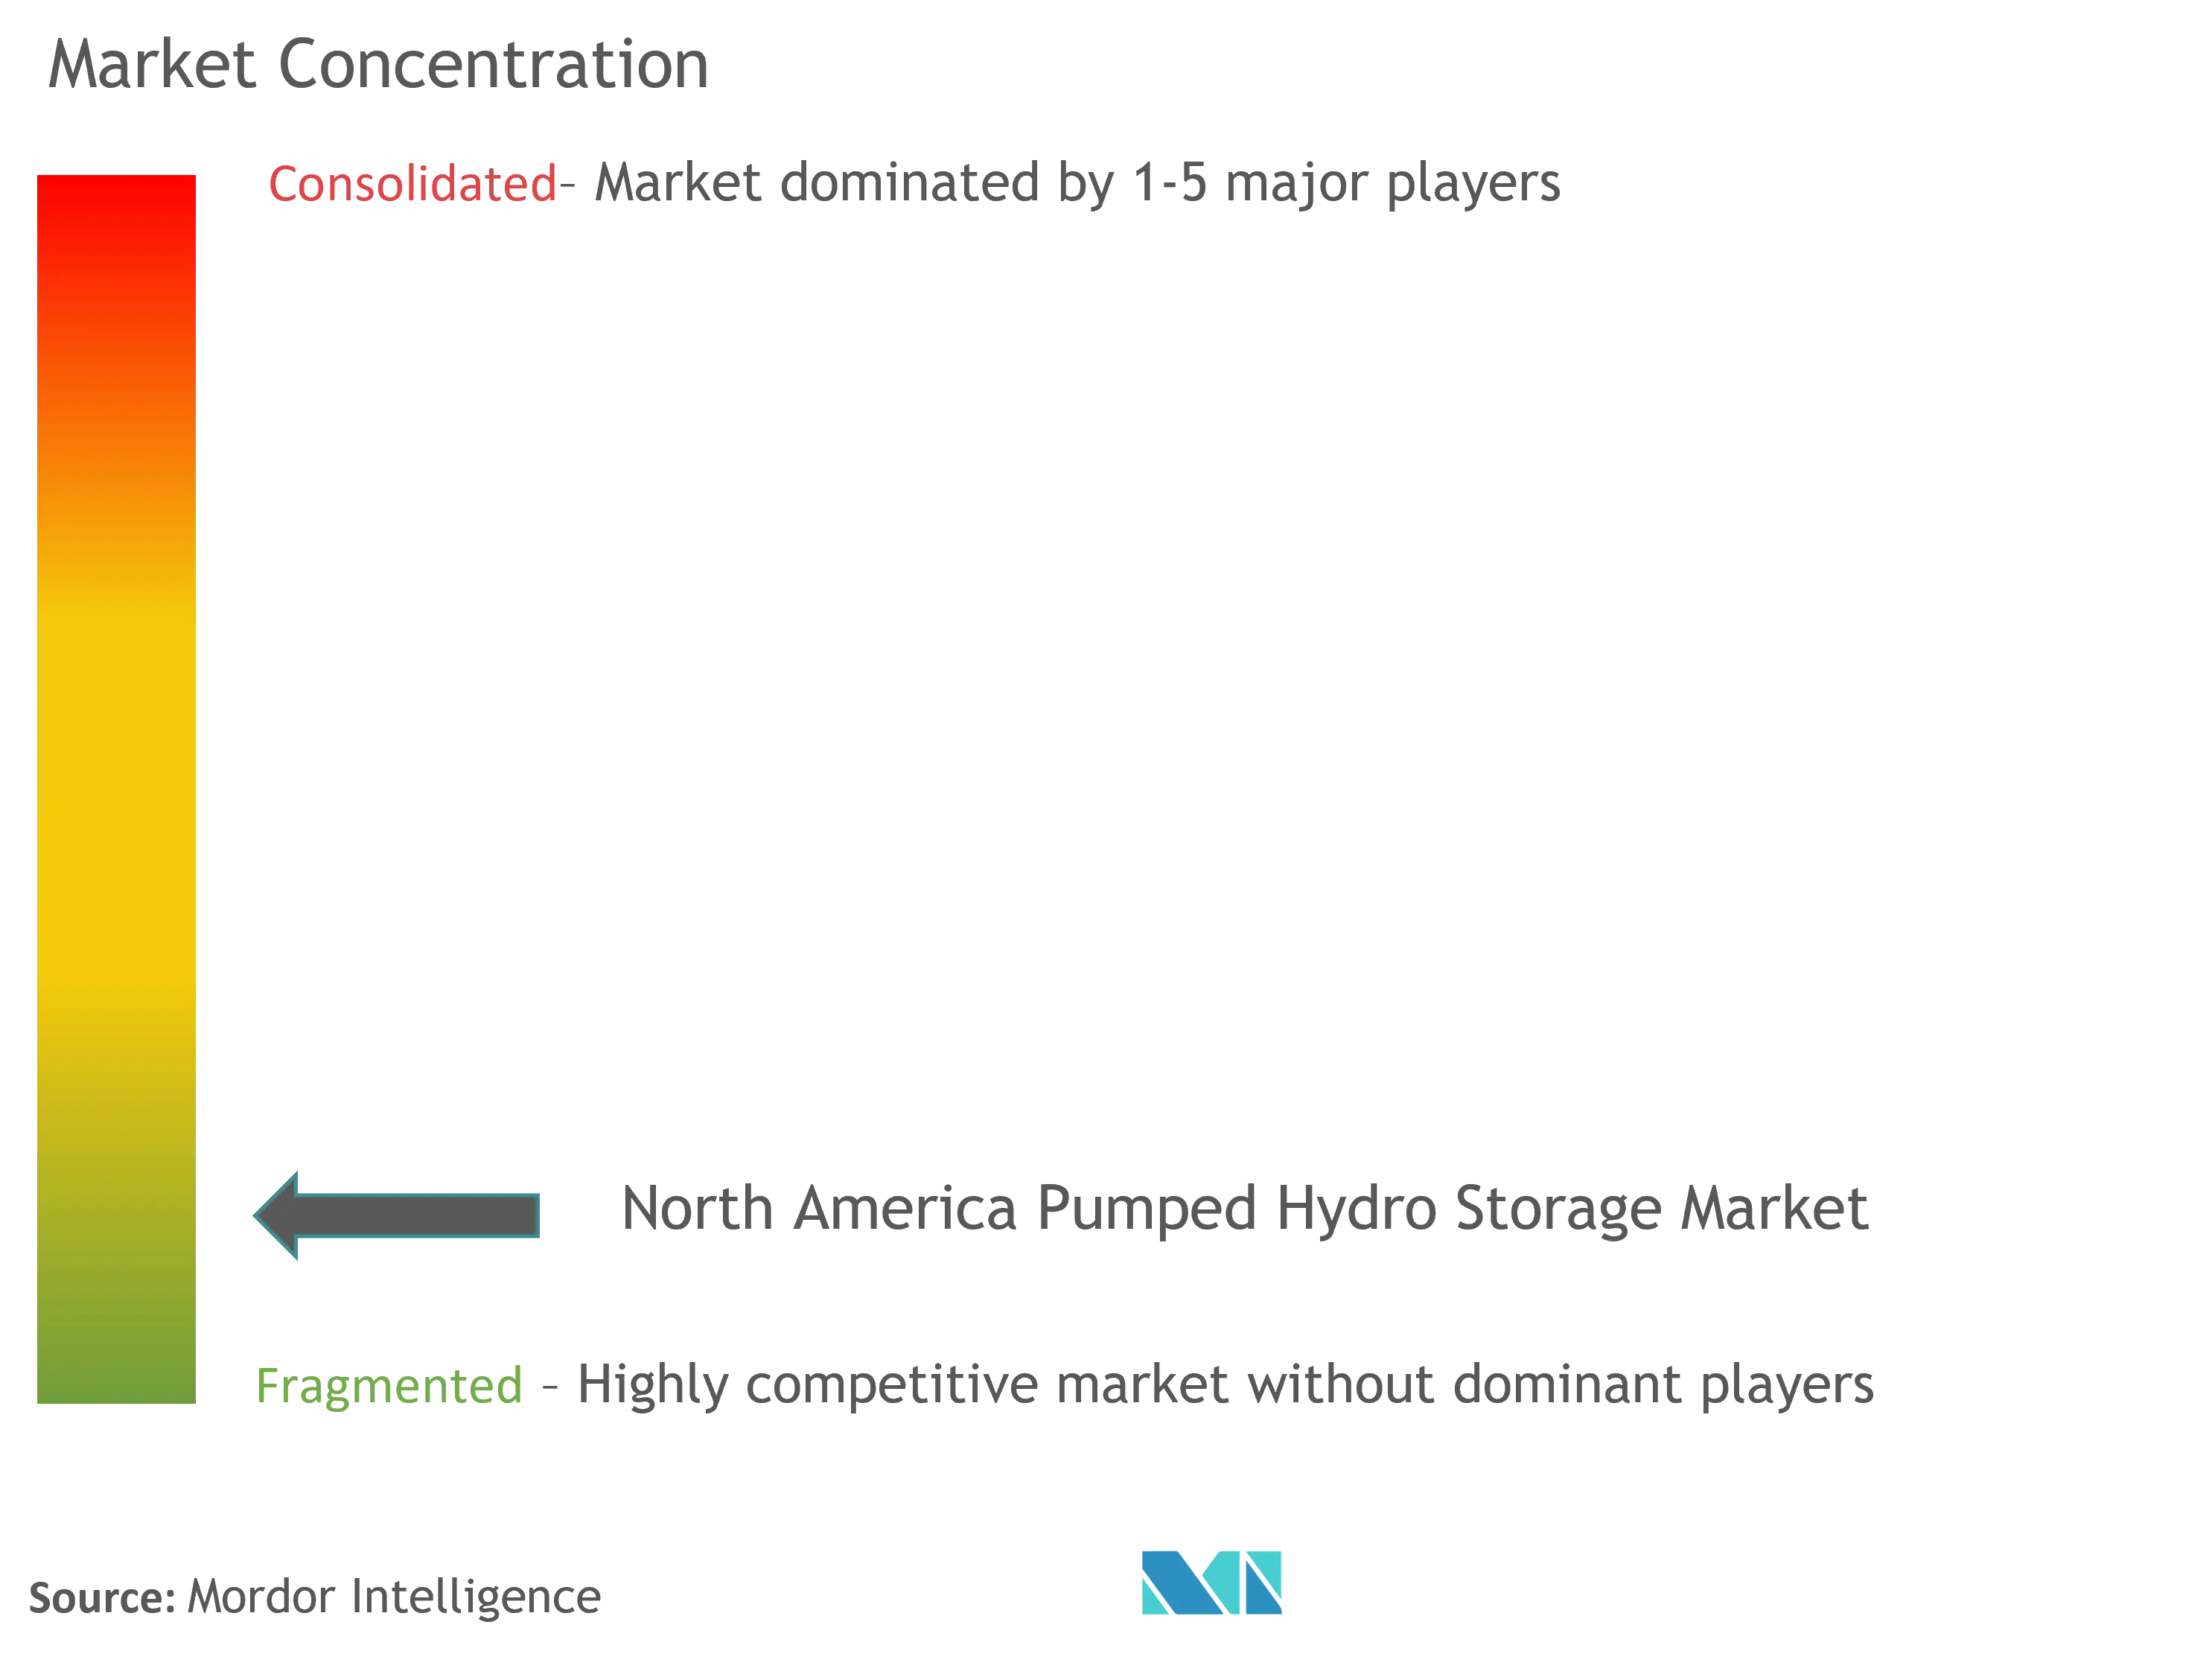 North America Pumped Hydro Storage Market Concentration